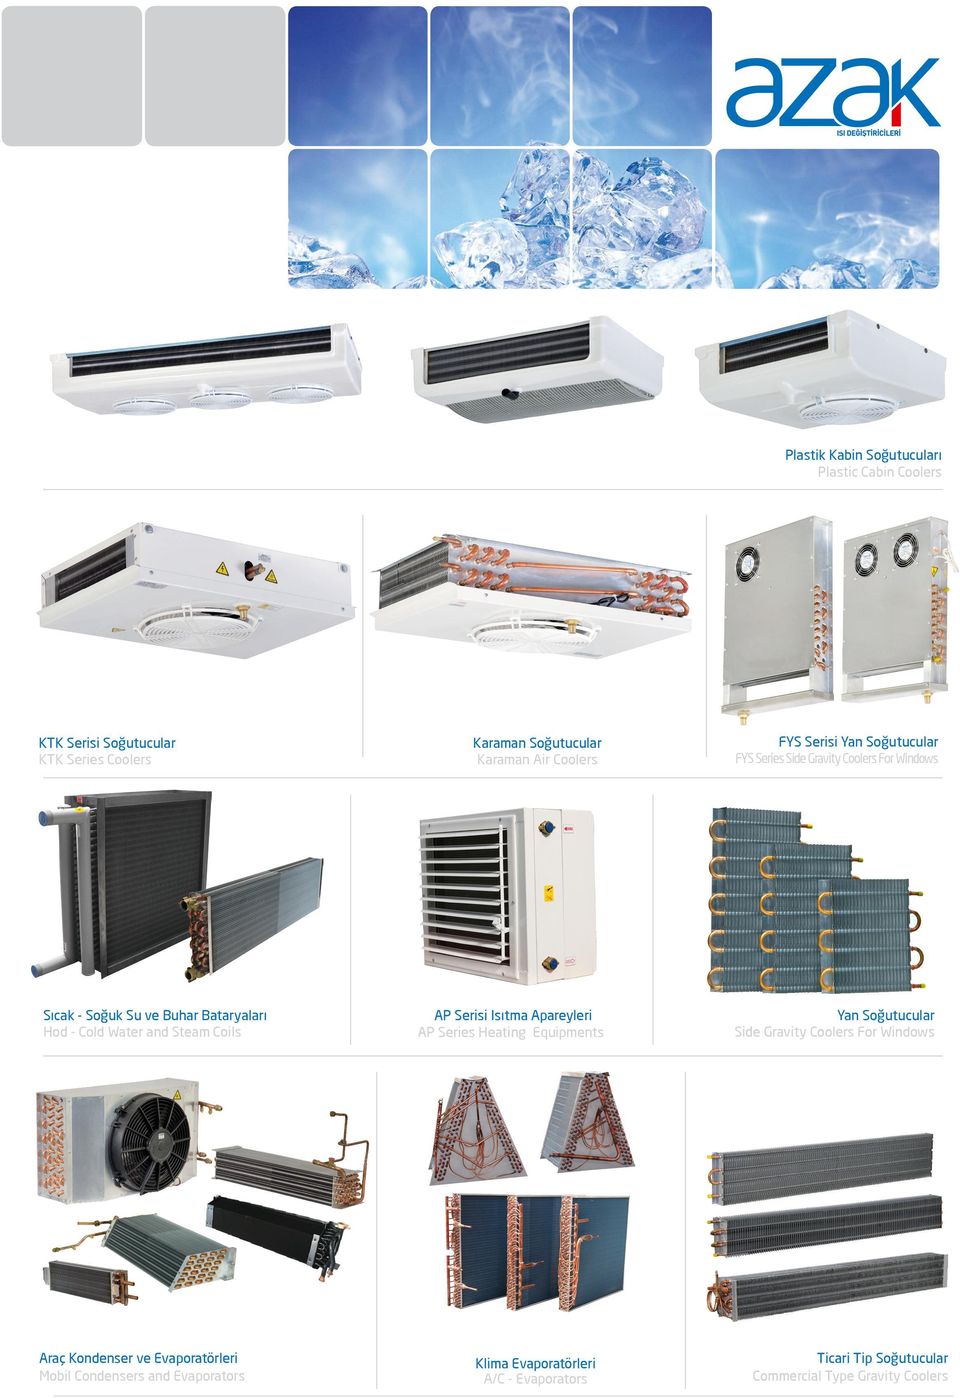 FYS Serisi Yan Soğutucular FYS Series Side Gravity Coolers For Windows AP Serisi Isıtma Apareyleri AP Series Heating Equipments Yan